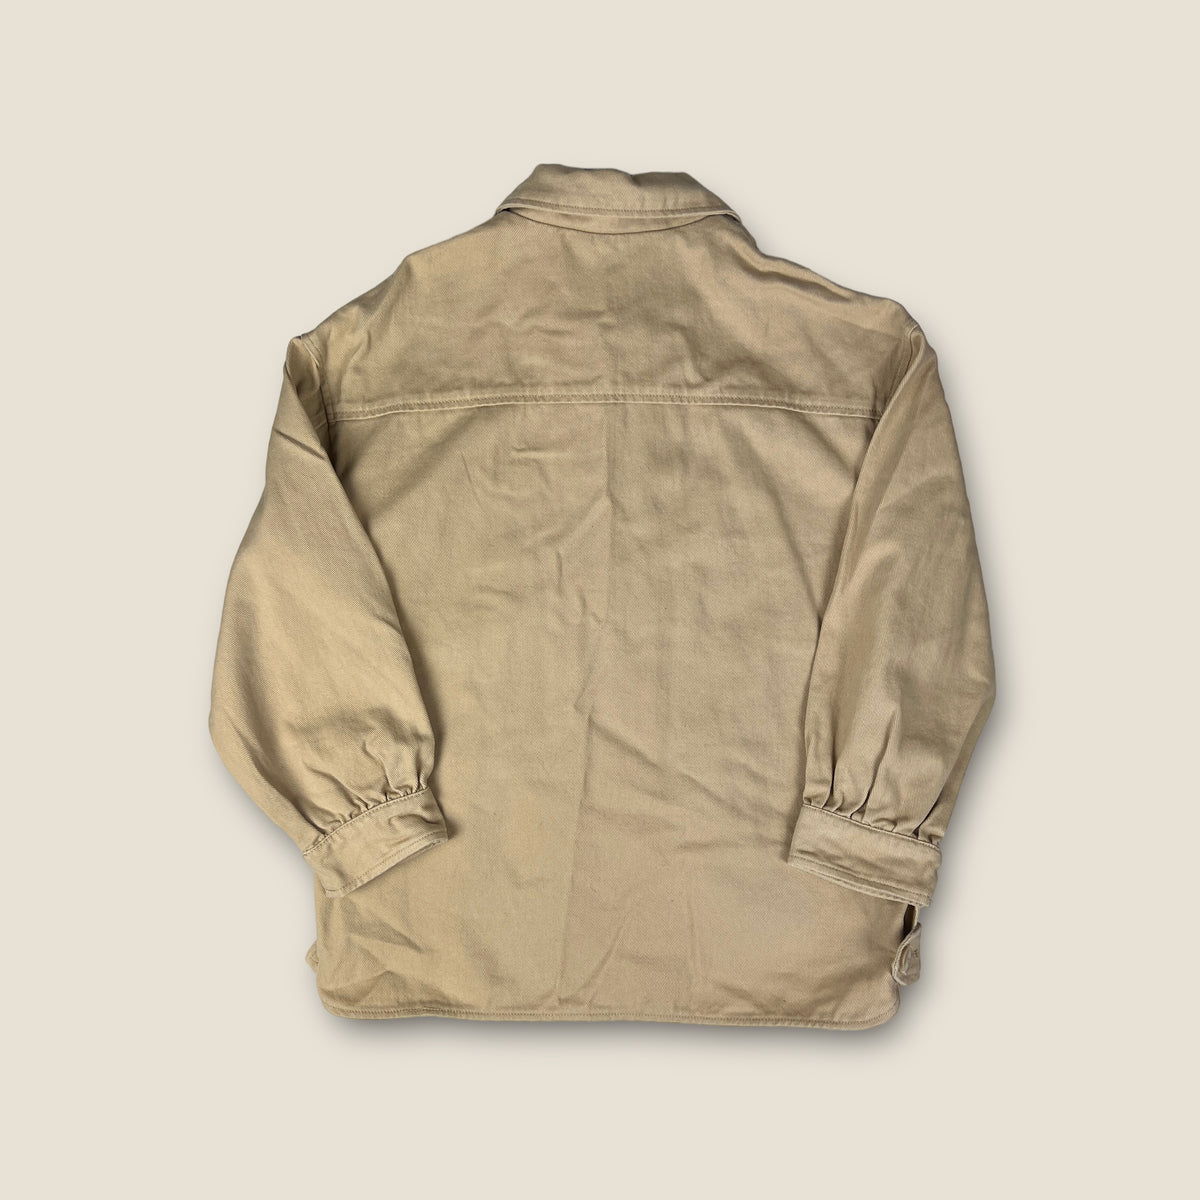 Zara Chore Jacket size 11/12